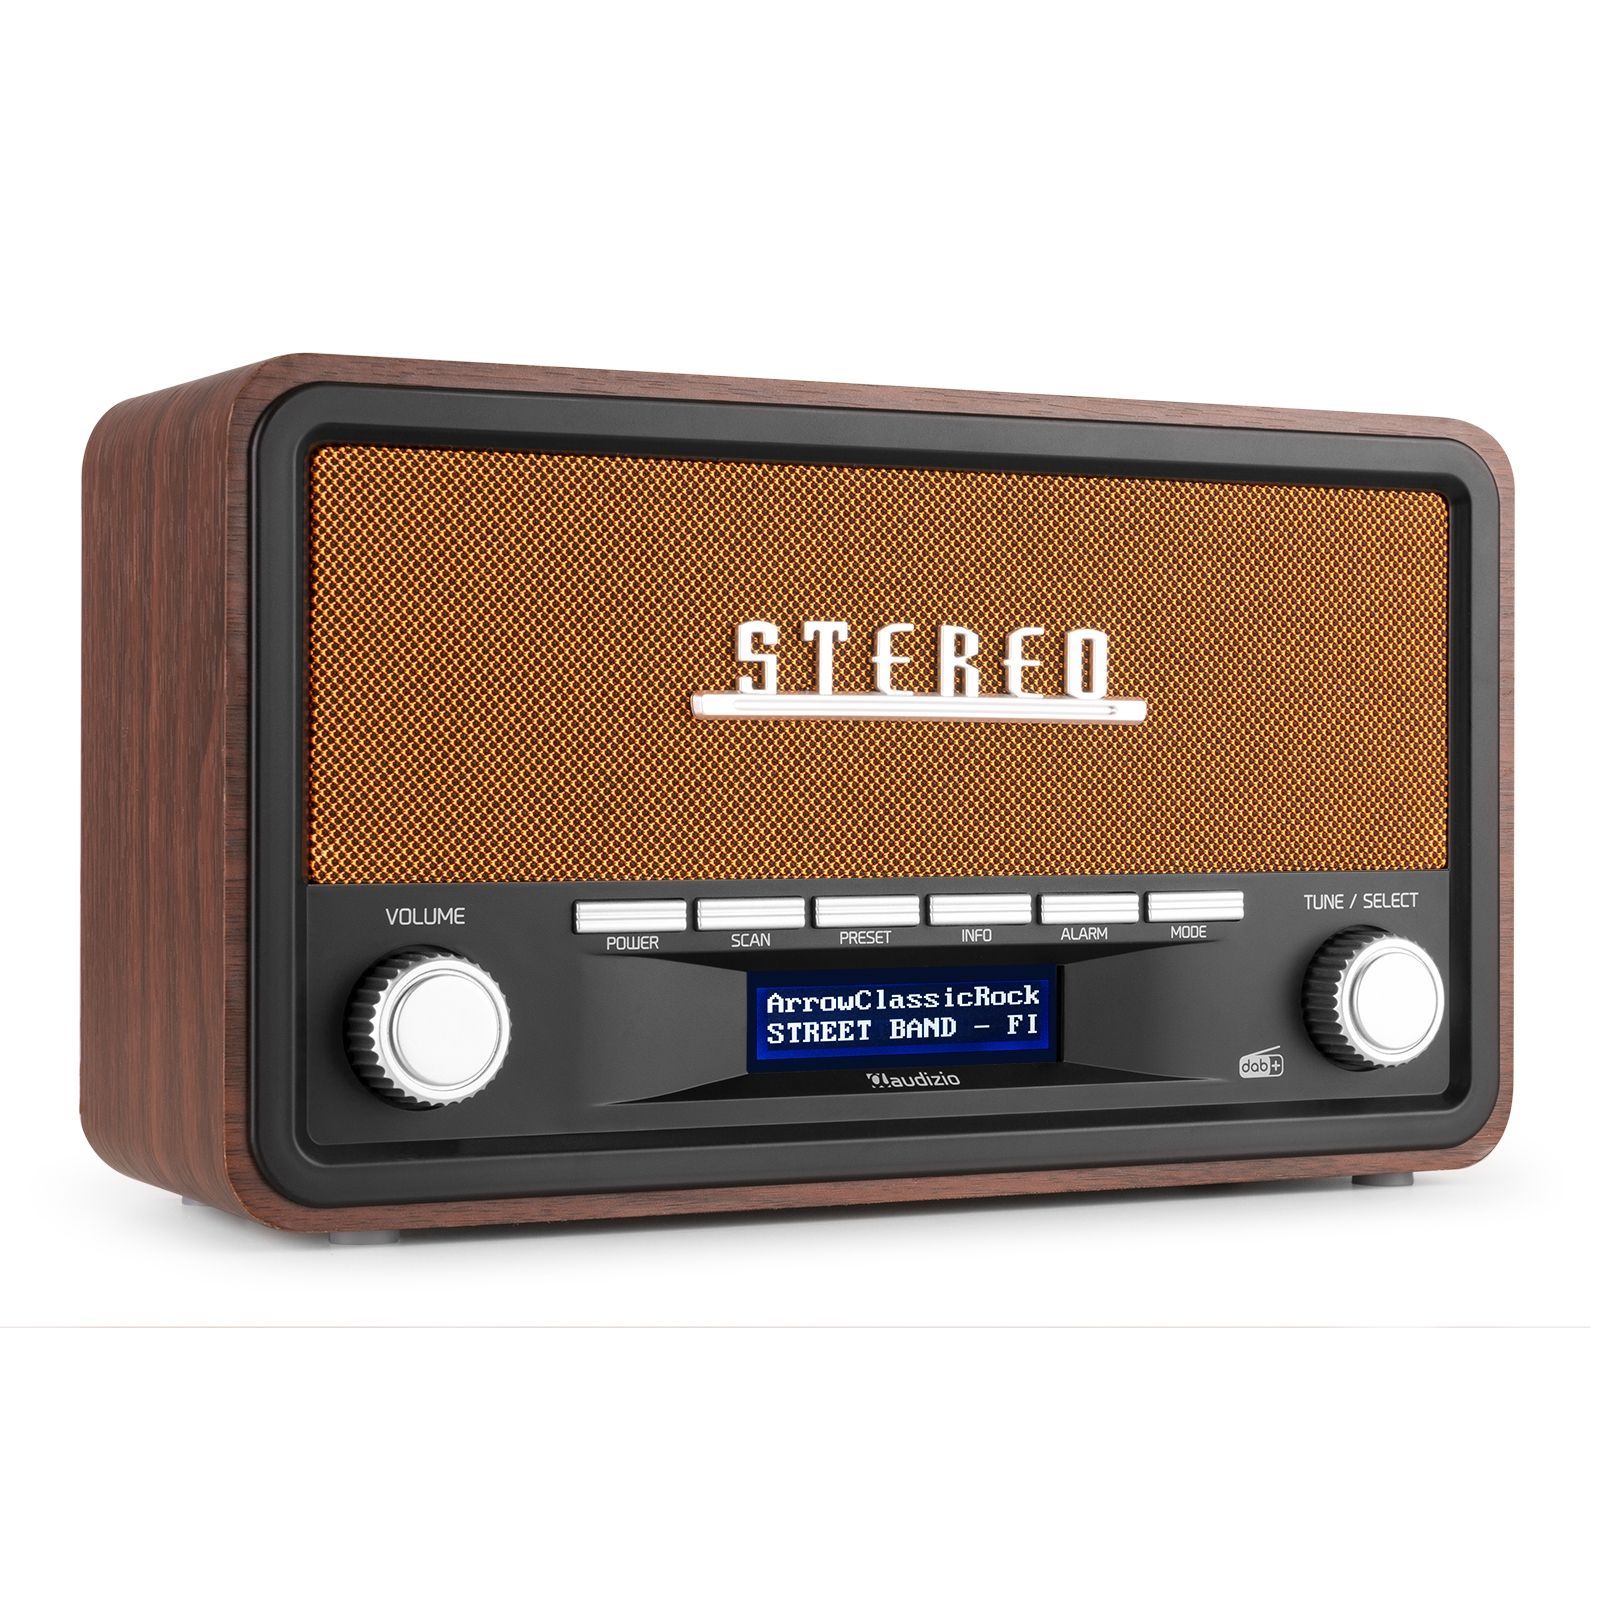 knuffel Maak leven eeuw Audizio Foggia retro DAB+ radio met Bluetooth - Stereo draagbare radio met  alarm - 50W - Koper kopen?